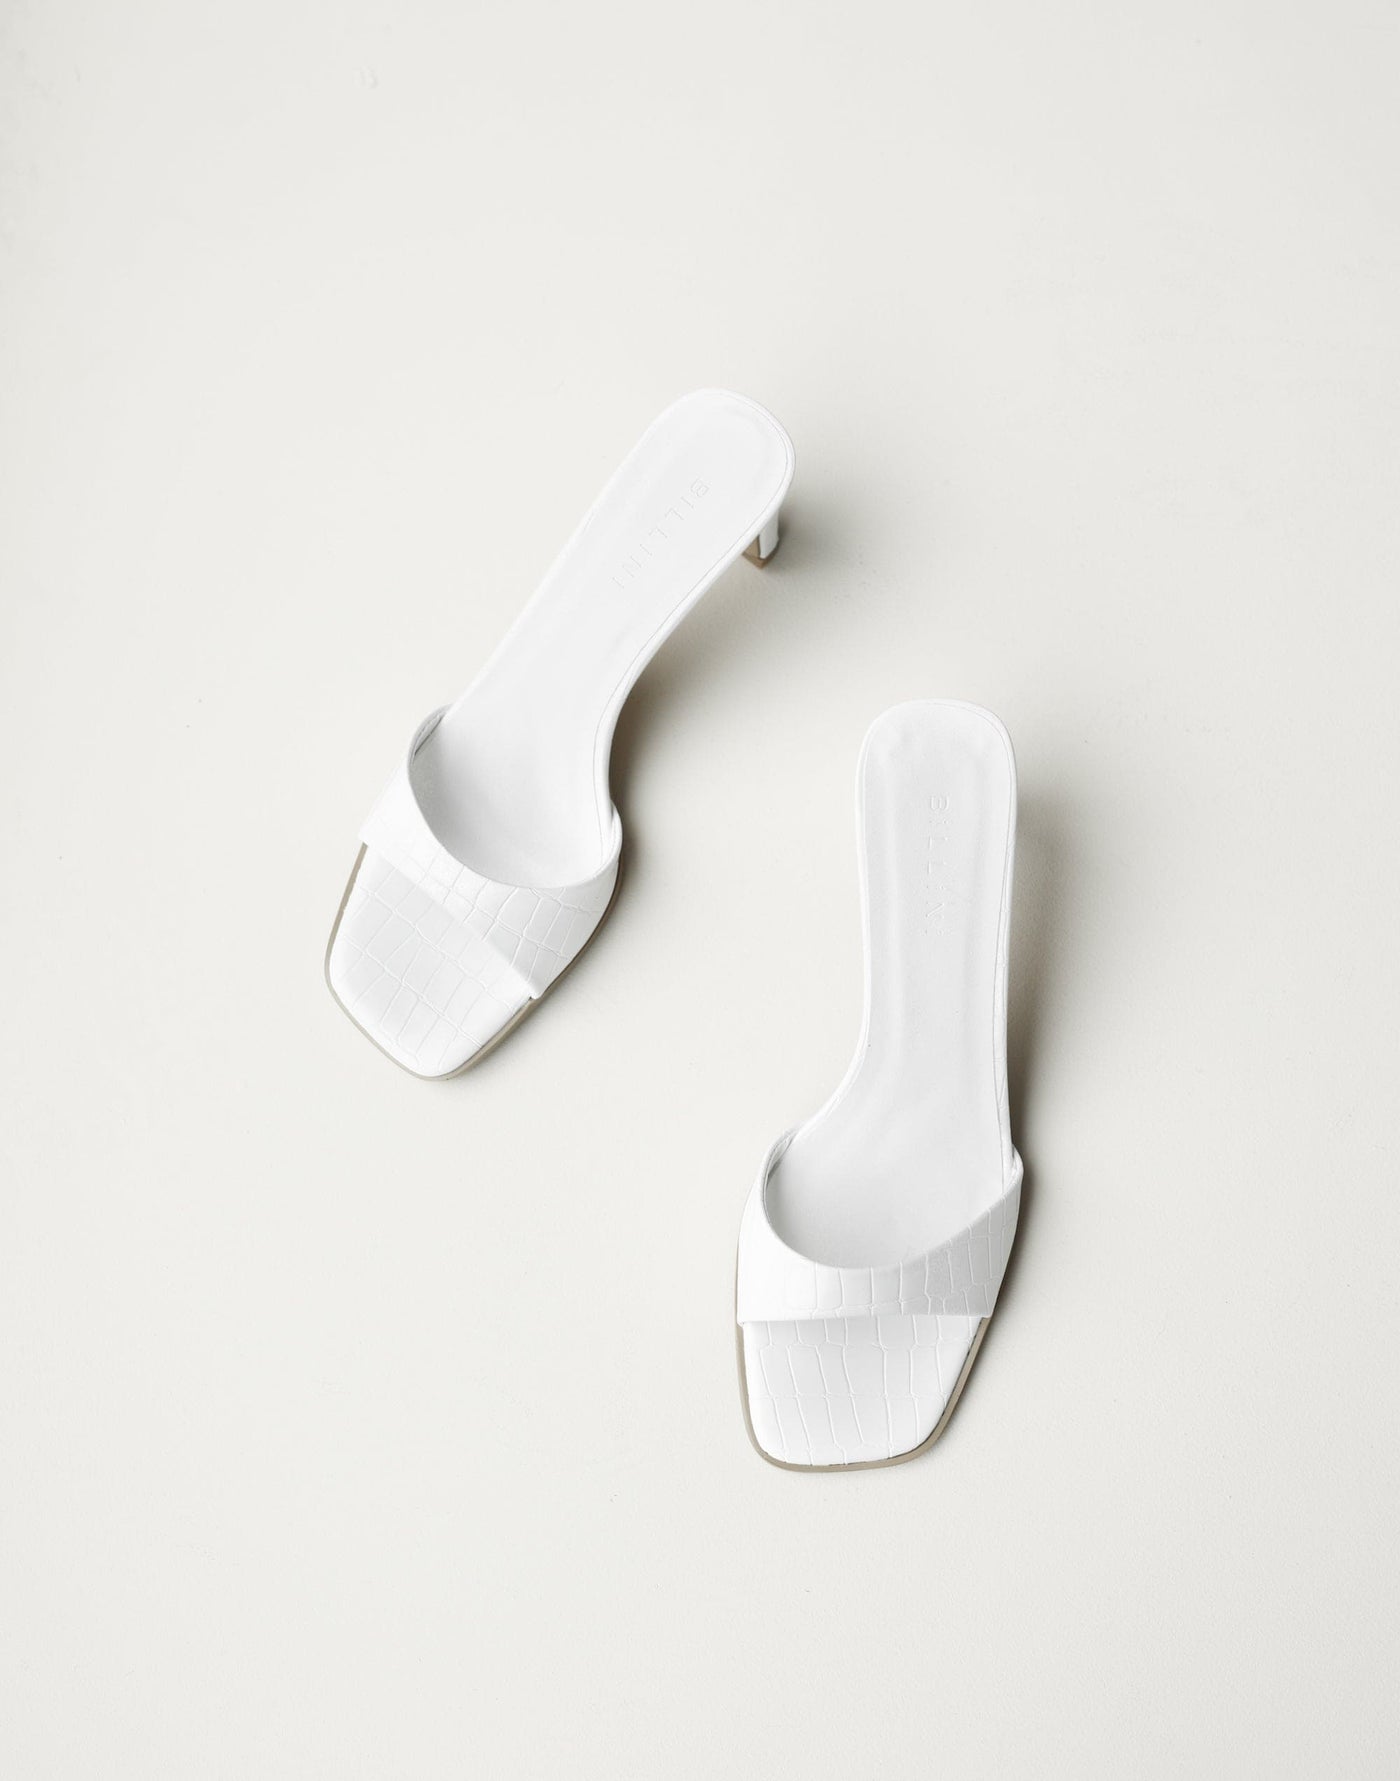 Karvan Heels (White Croc) - By Billini - Slip On Heel - Women's Shoes - Charcoal Clothing